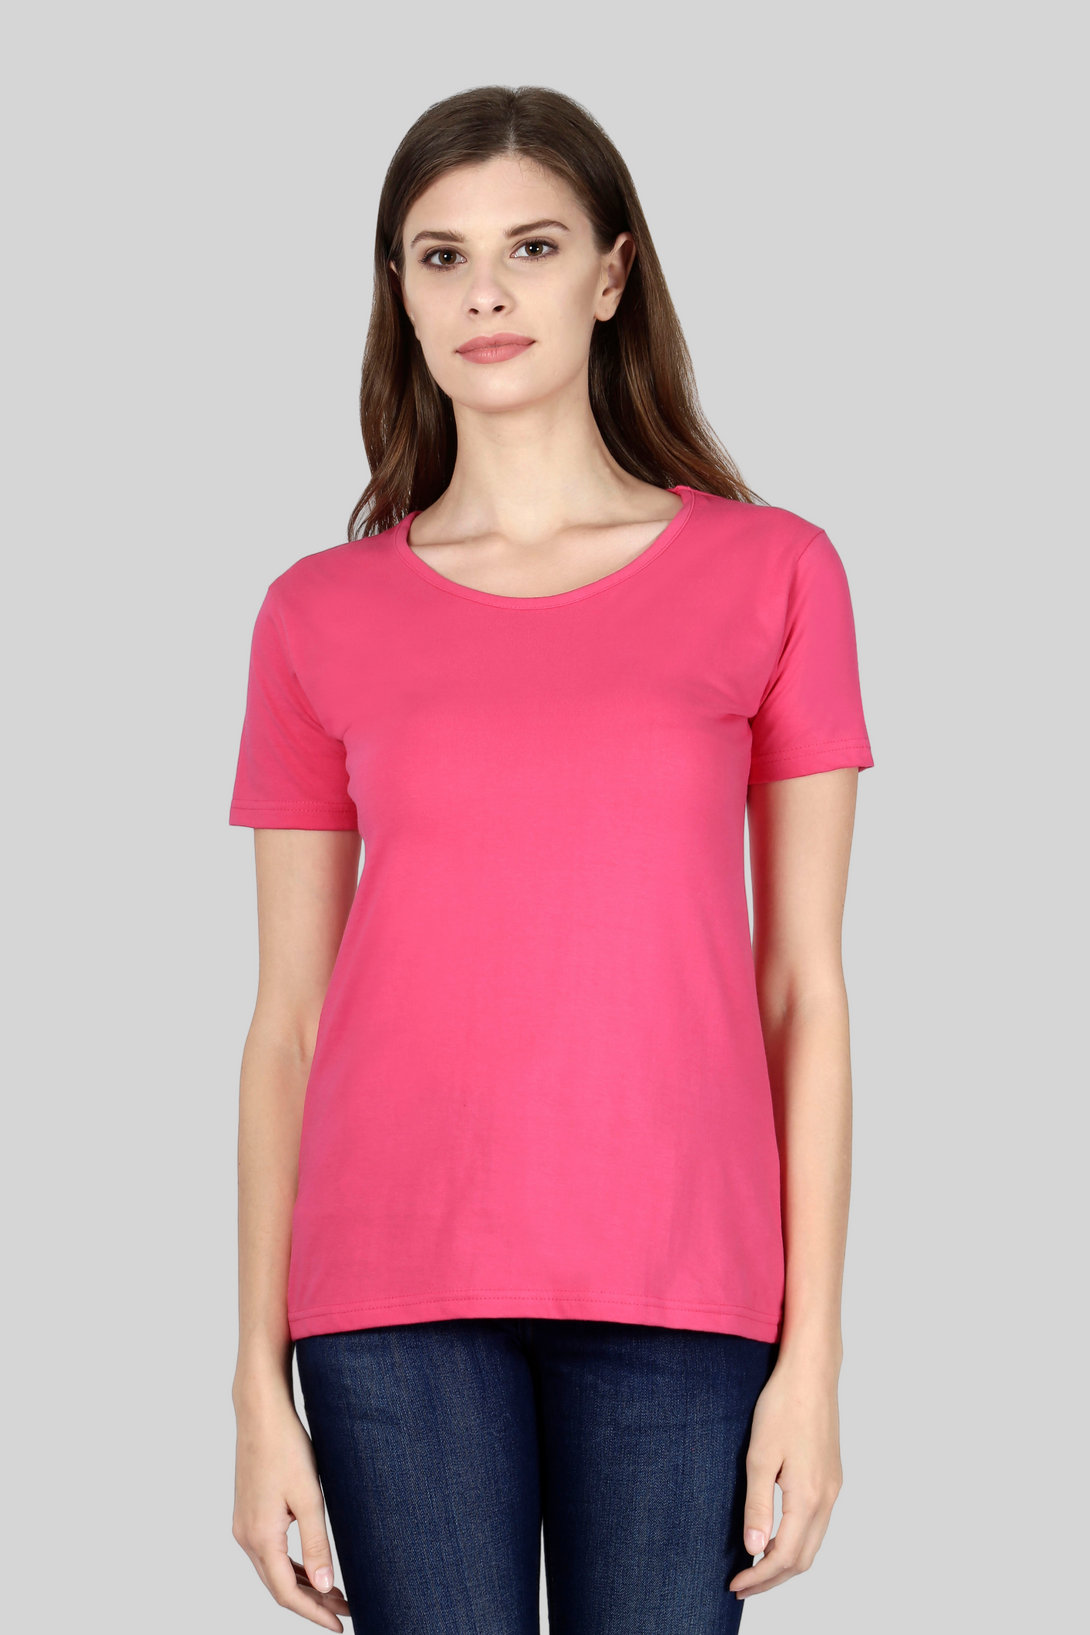 Pink Scoop Neck T-Shirt For Women - WowWaves - 3